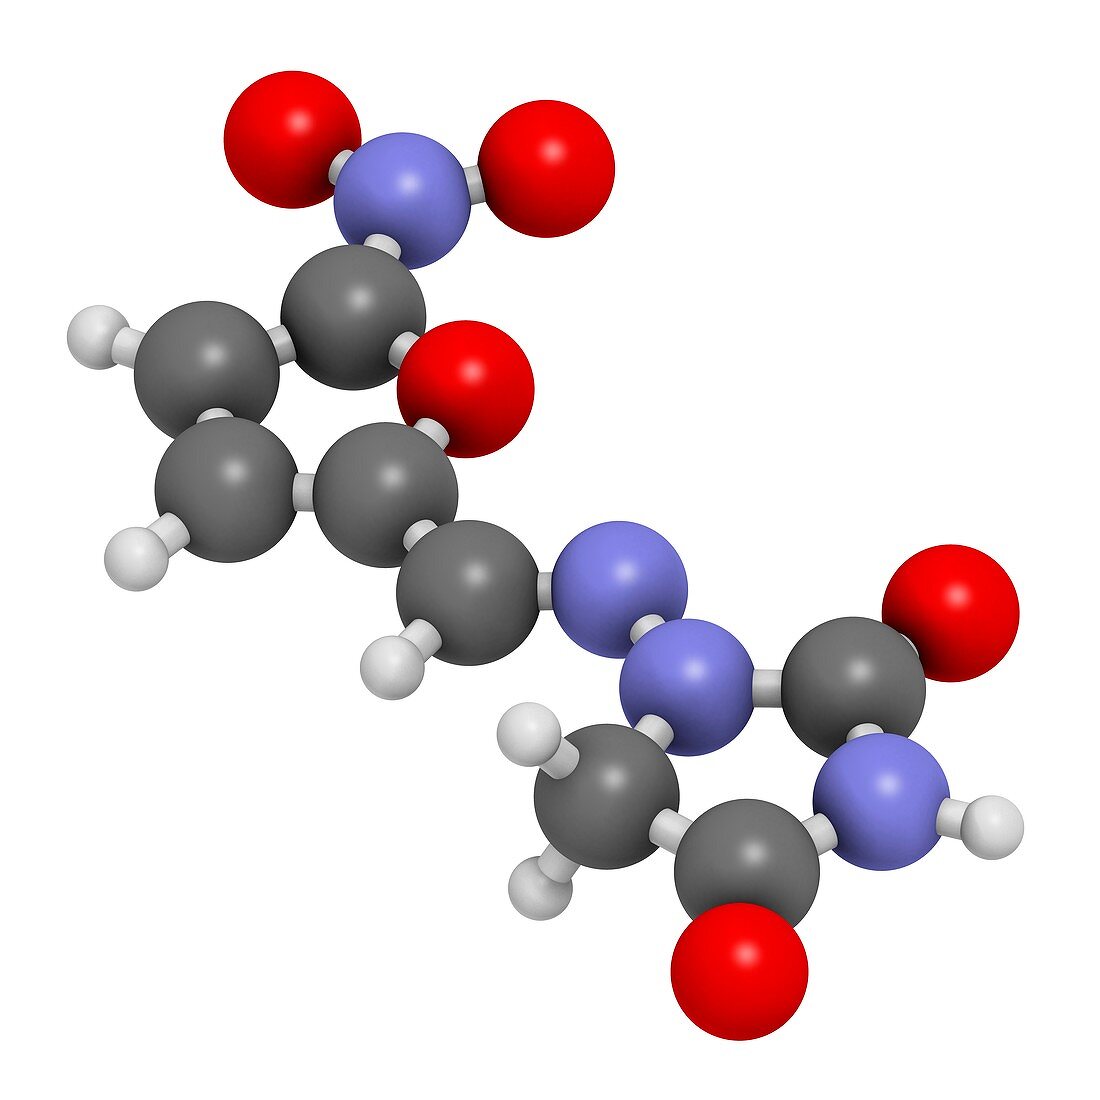 Nitrofurantoin antibiotic drug molecule